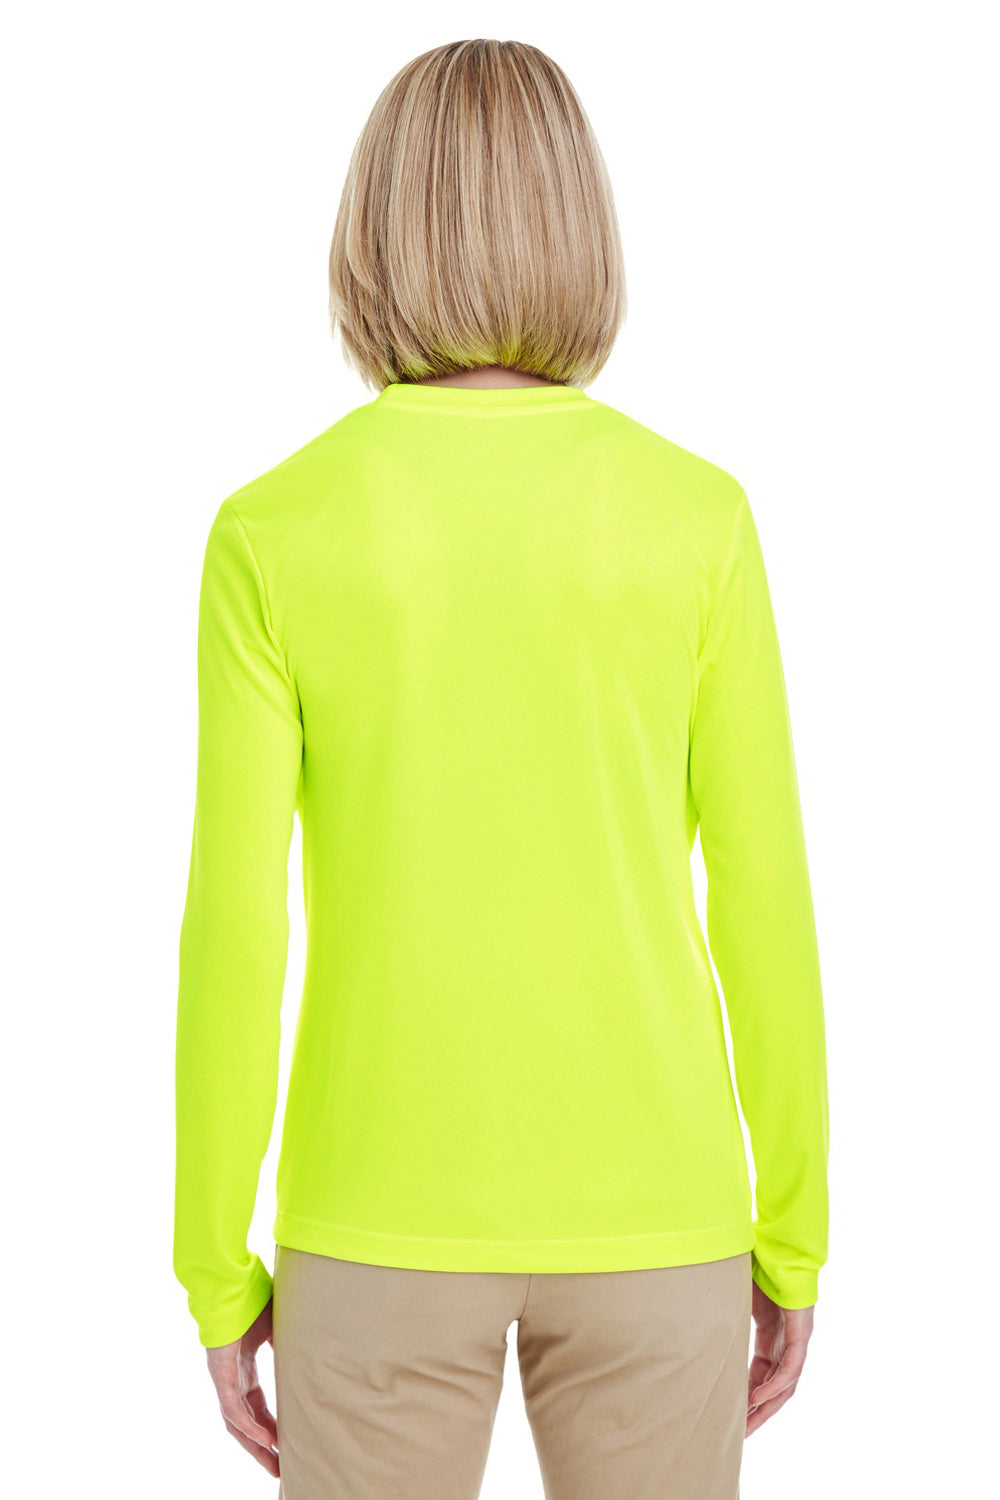 UltraClub 8622W Womens Cool & Dry Performance Moisture Wicking Long Sleeve Crewneck T-Shirt Bright Yellow Back